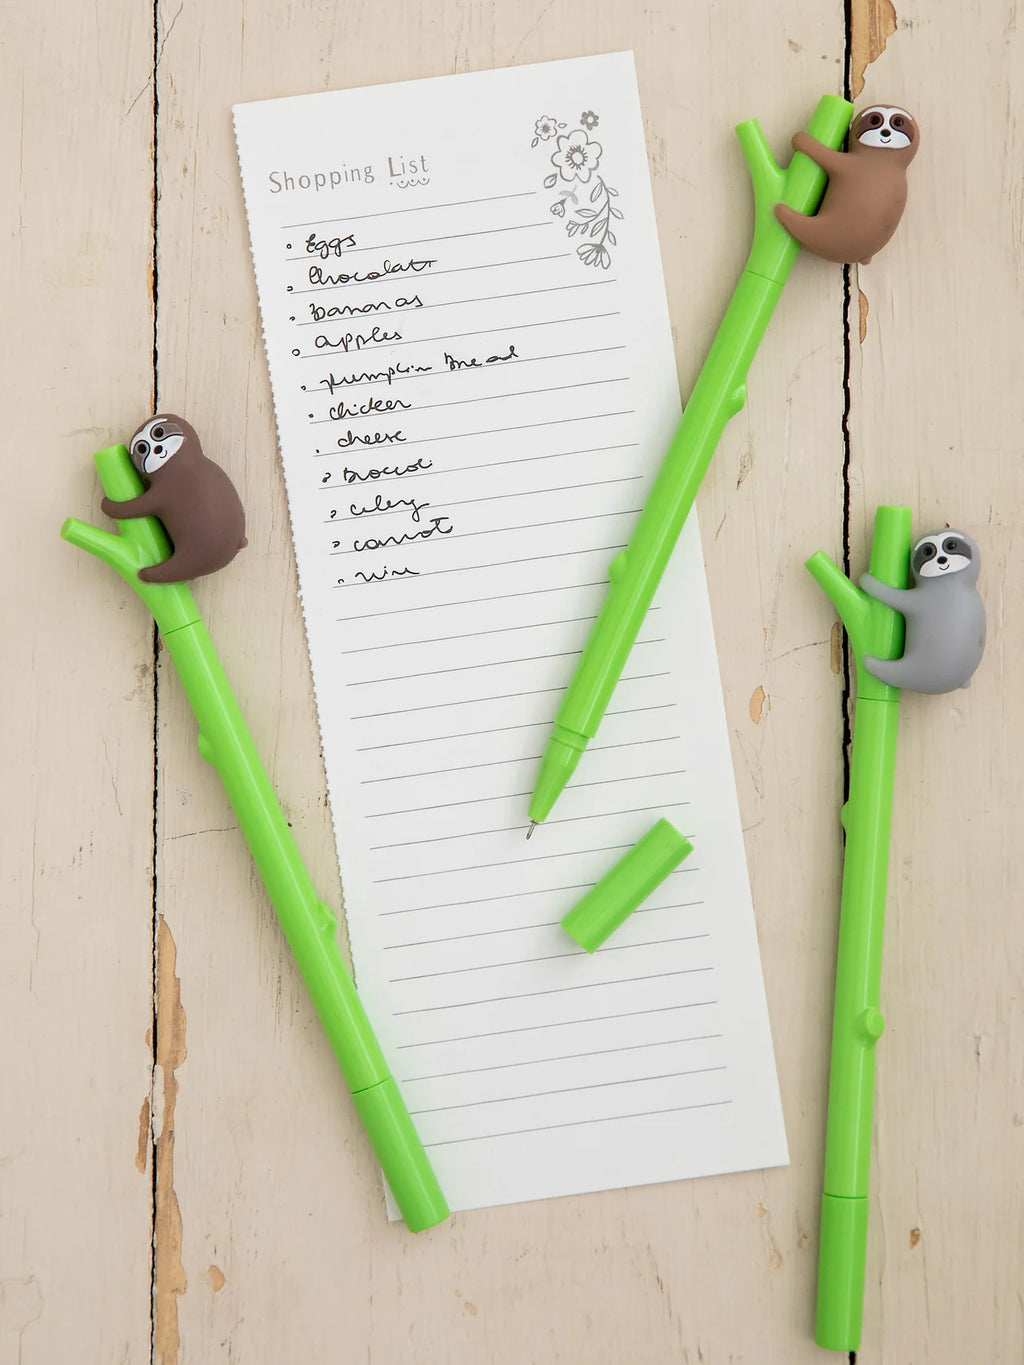 Sloth Gel Pen Set